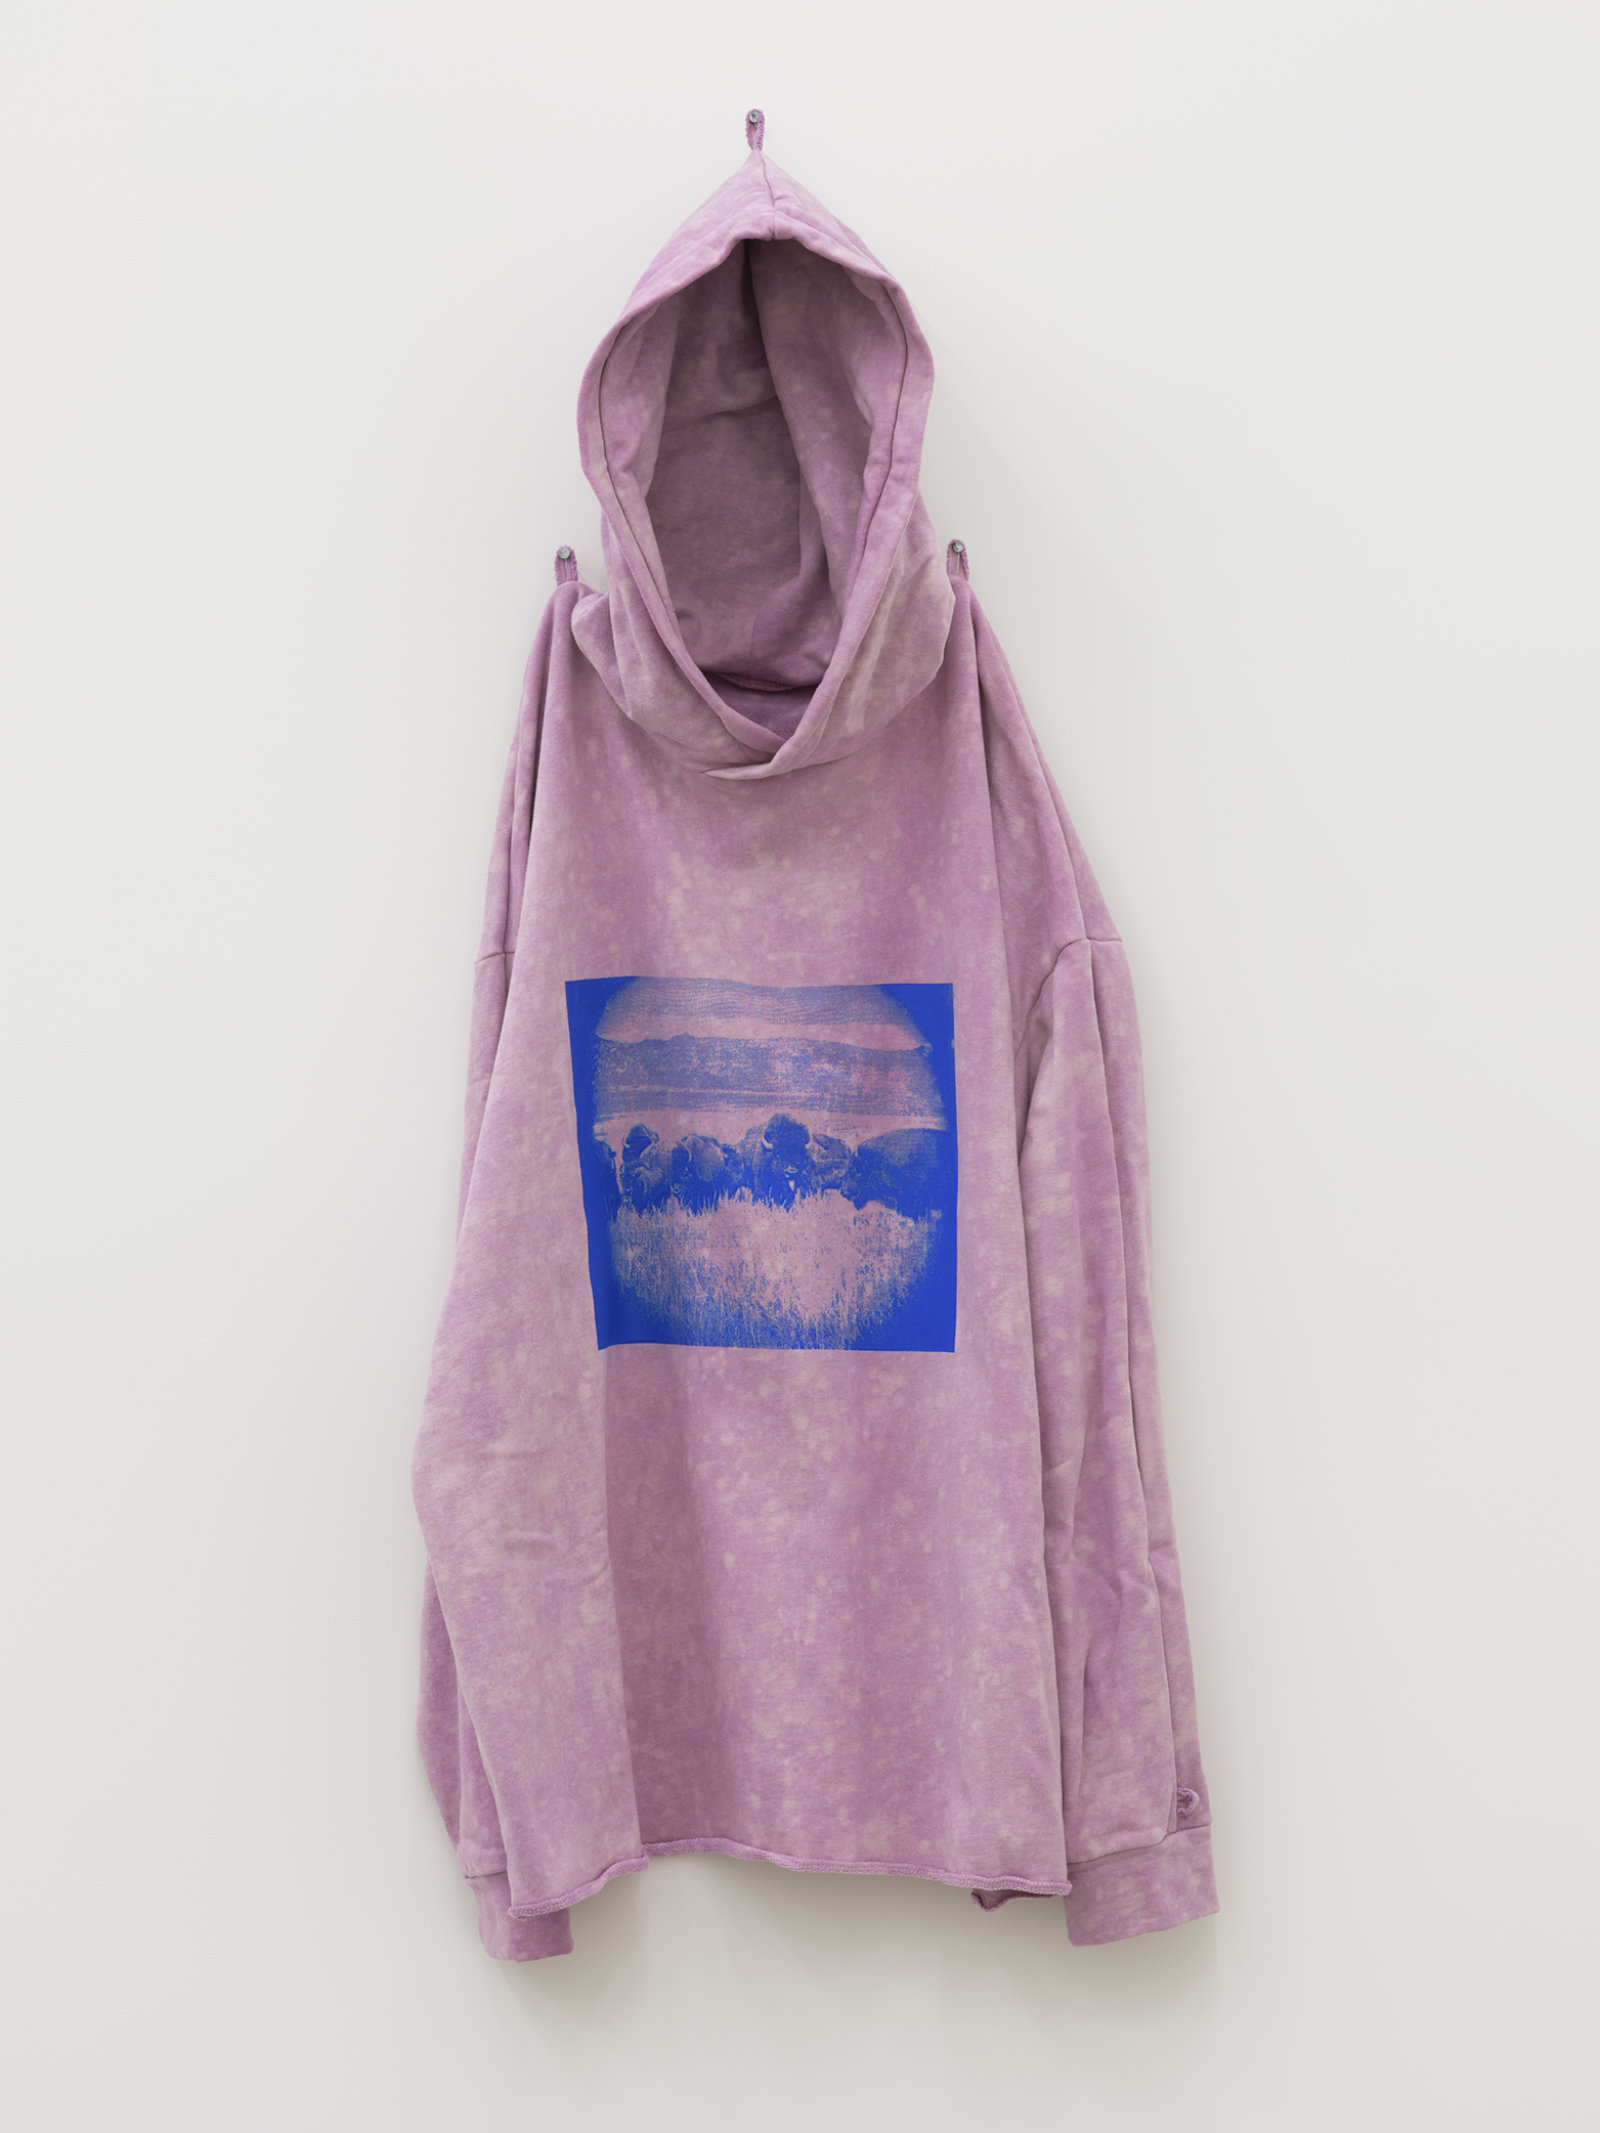 Duane Linklater, silentstar, delicacy, 2020, handmade hoodie, cochineal dye, silkscreen, nails, 56 x 20 x 5 in. (142 x 51 x 13 cm)